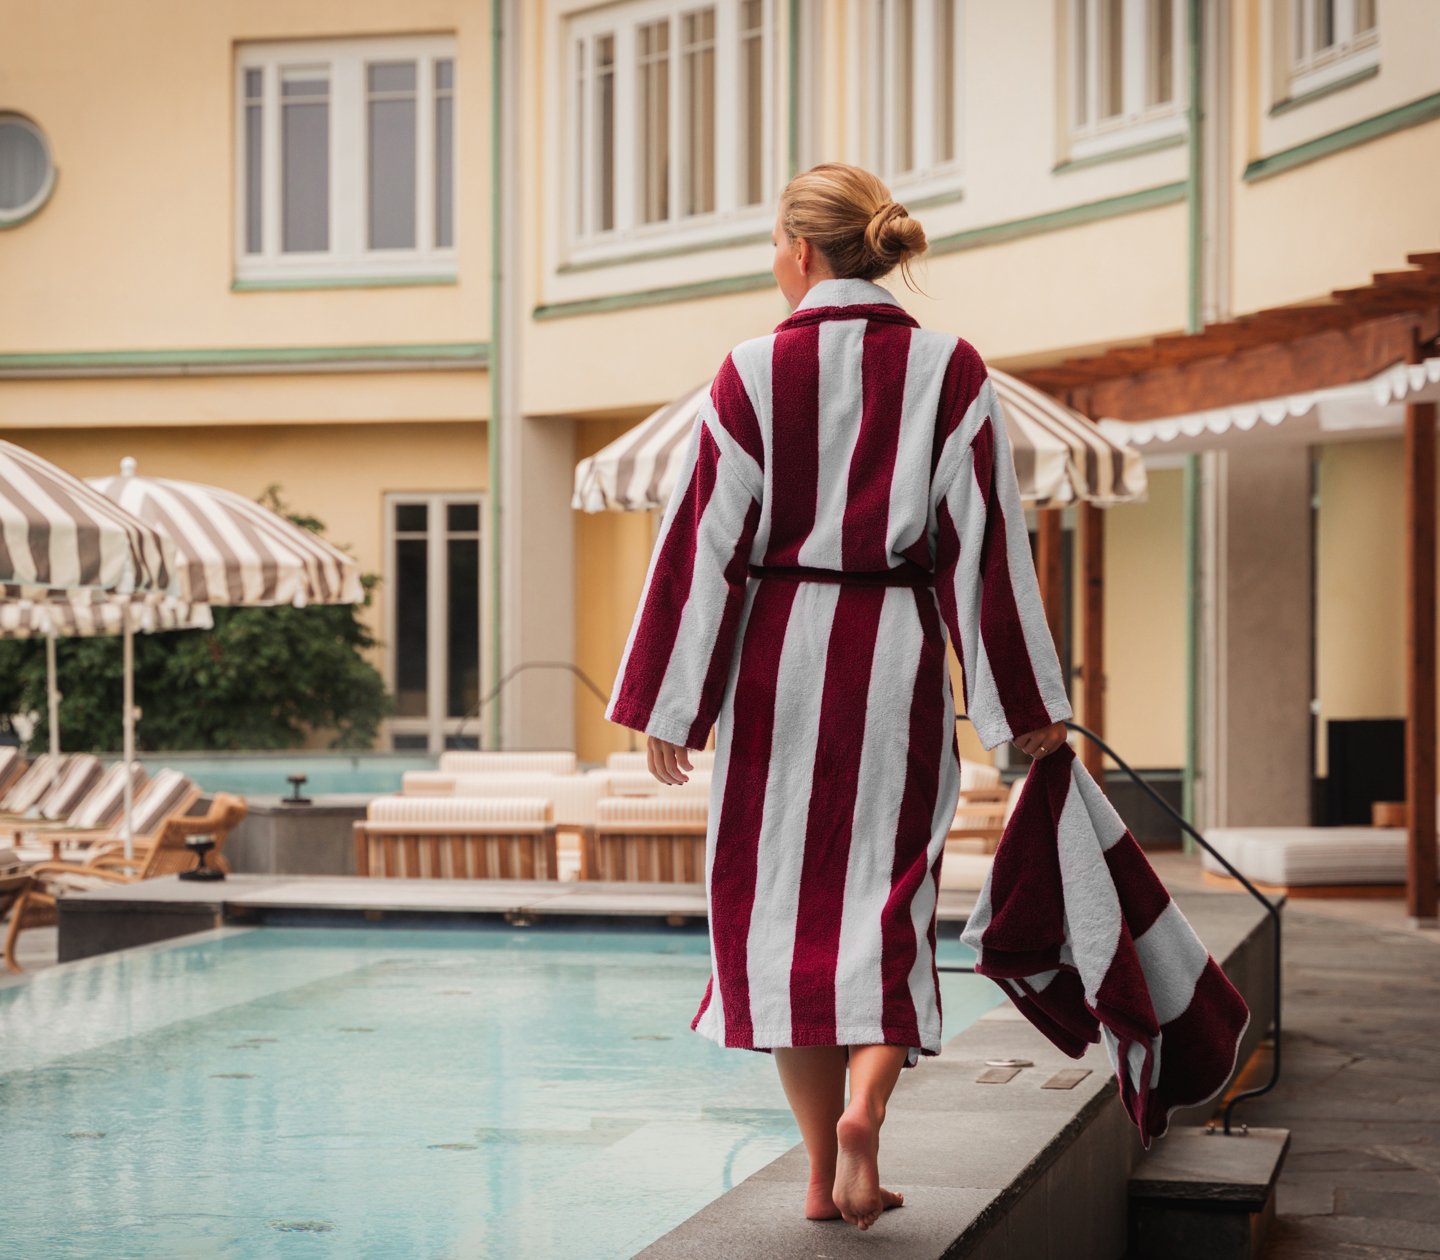 Woman in striped bathrobe walking on pool edge